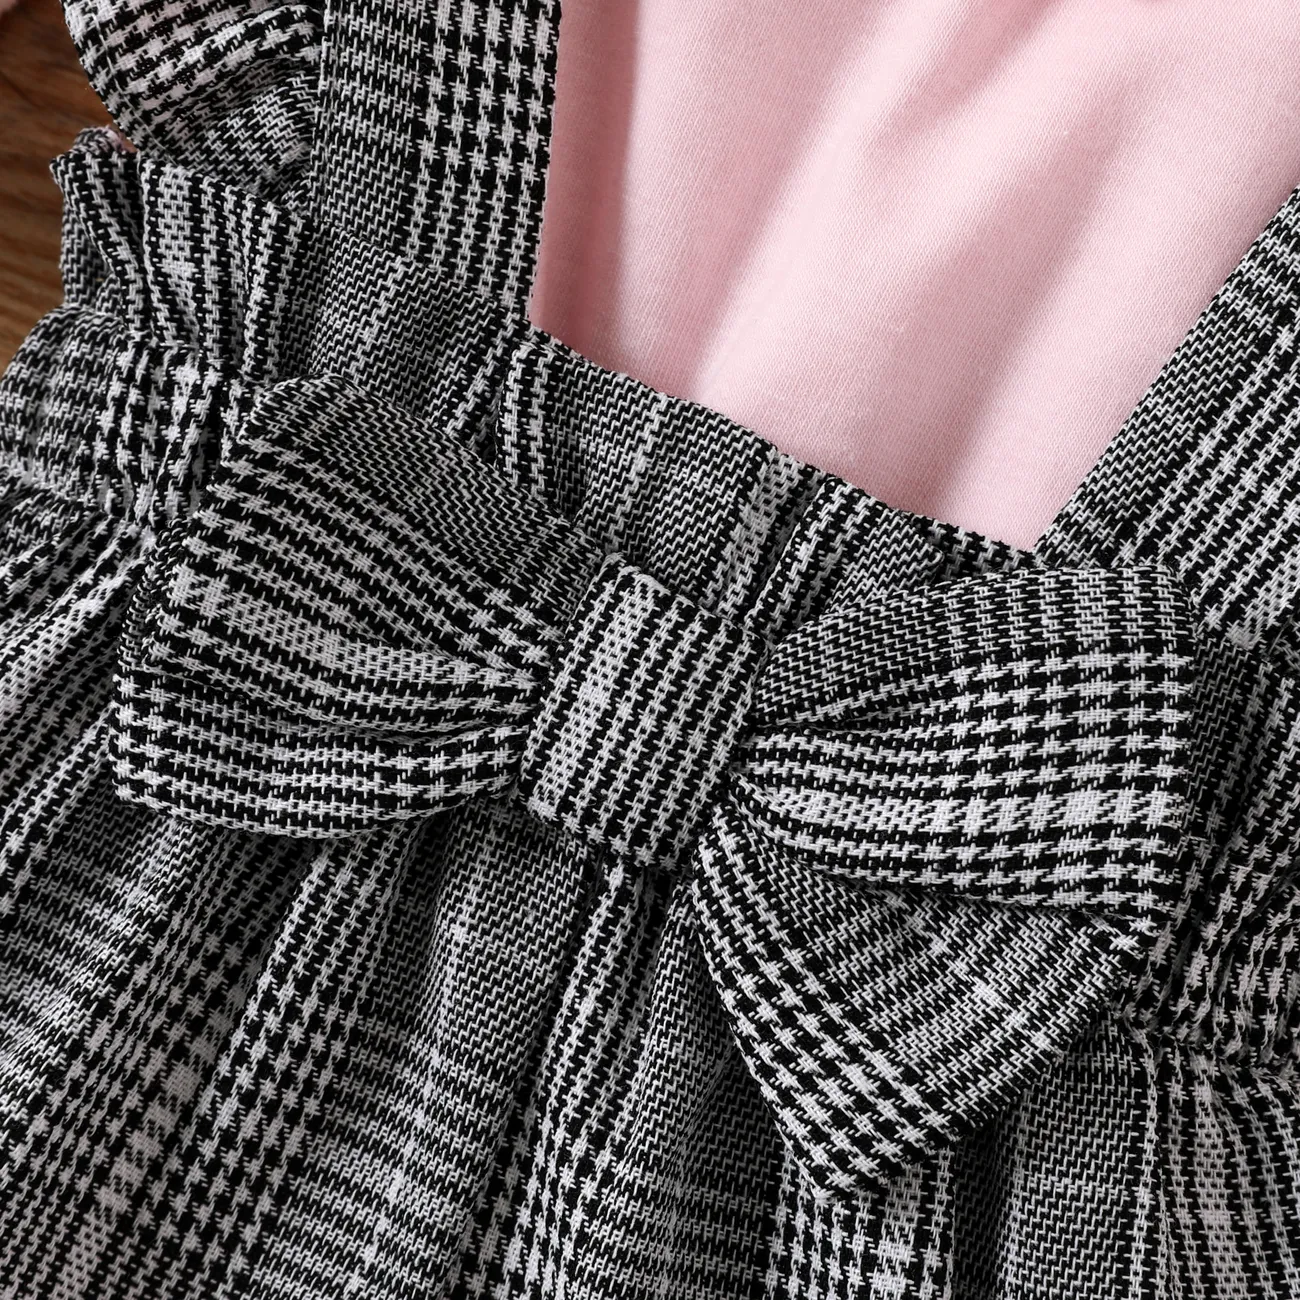  2pcs Baby Girls' Avant-Garde Grid/Houndstooth Ruffle Edge Top and Shorts Set  Pink big image 1